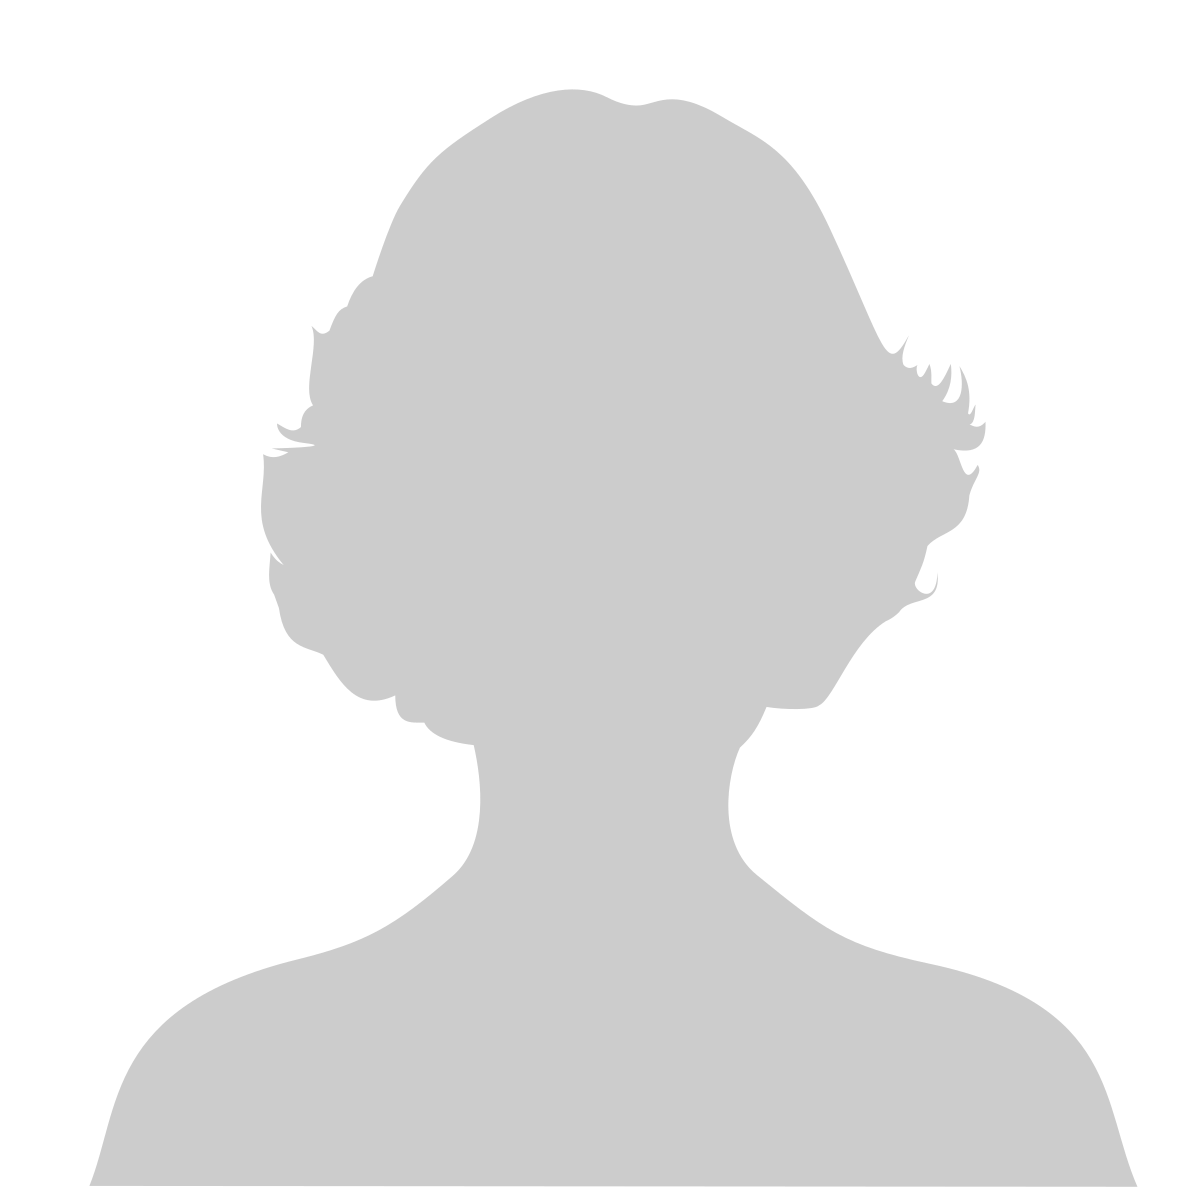 blank image placeholder for missing headshot